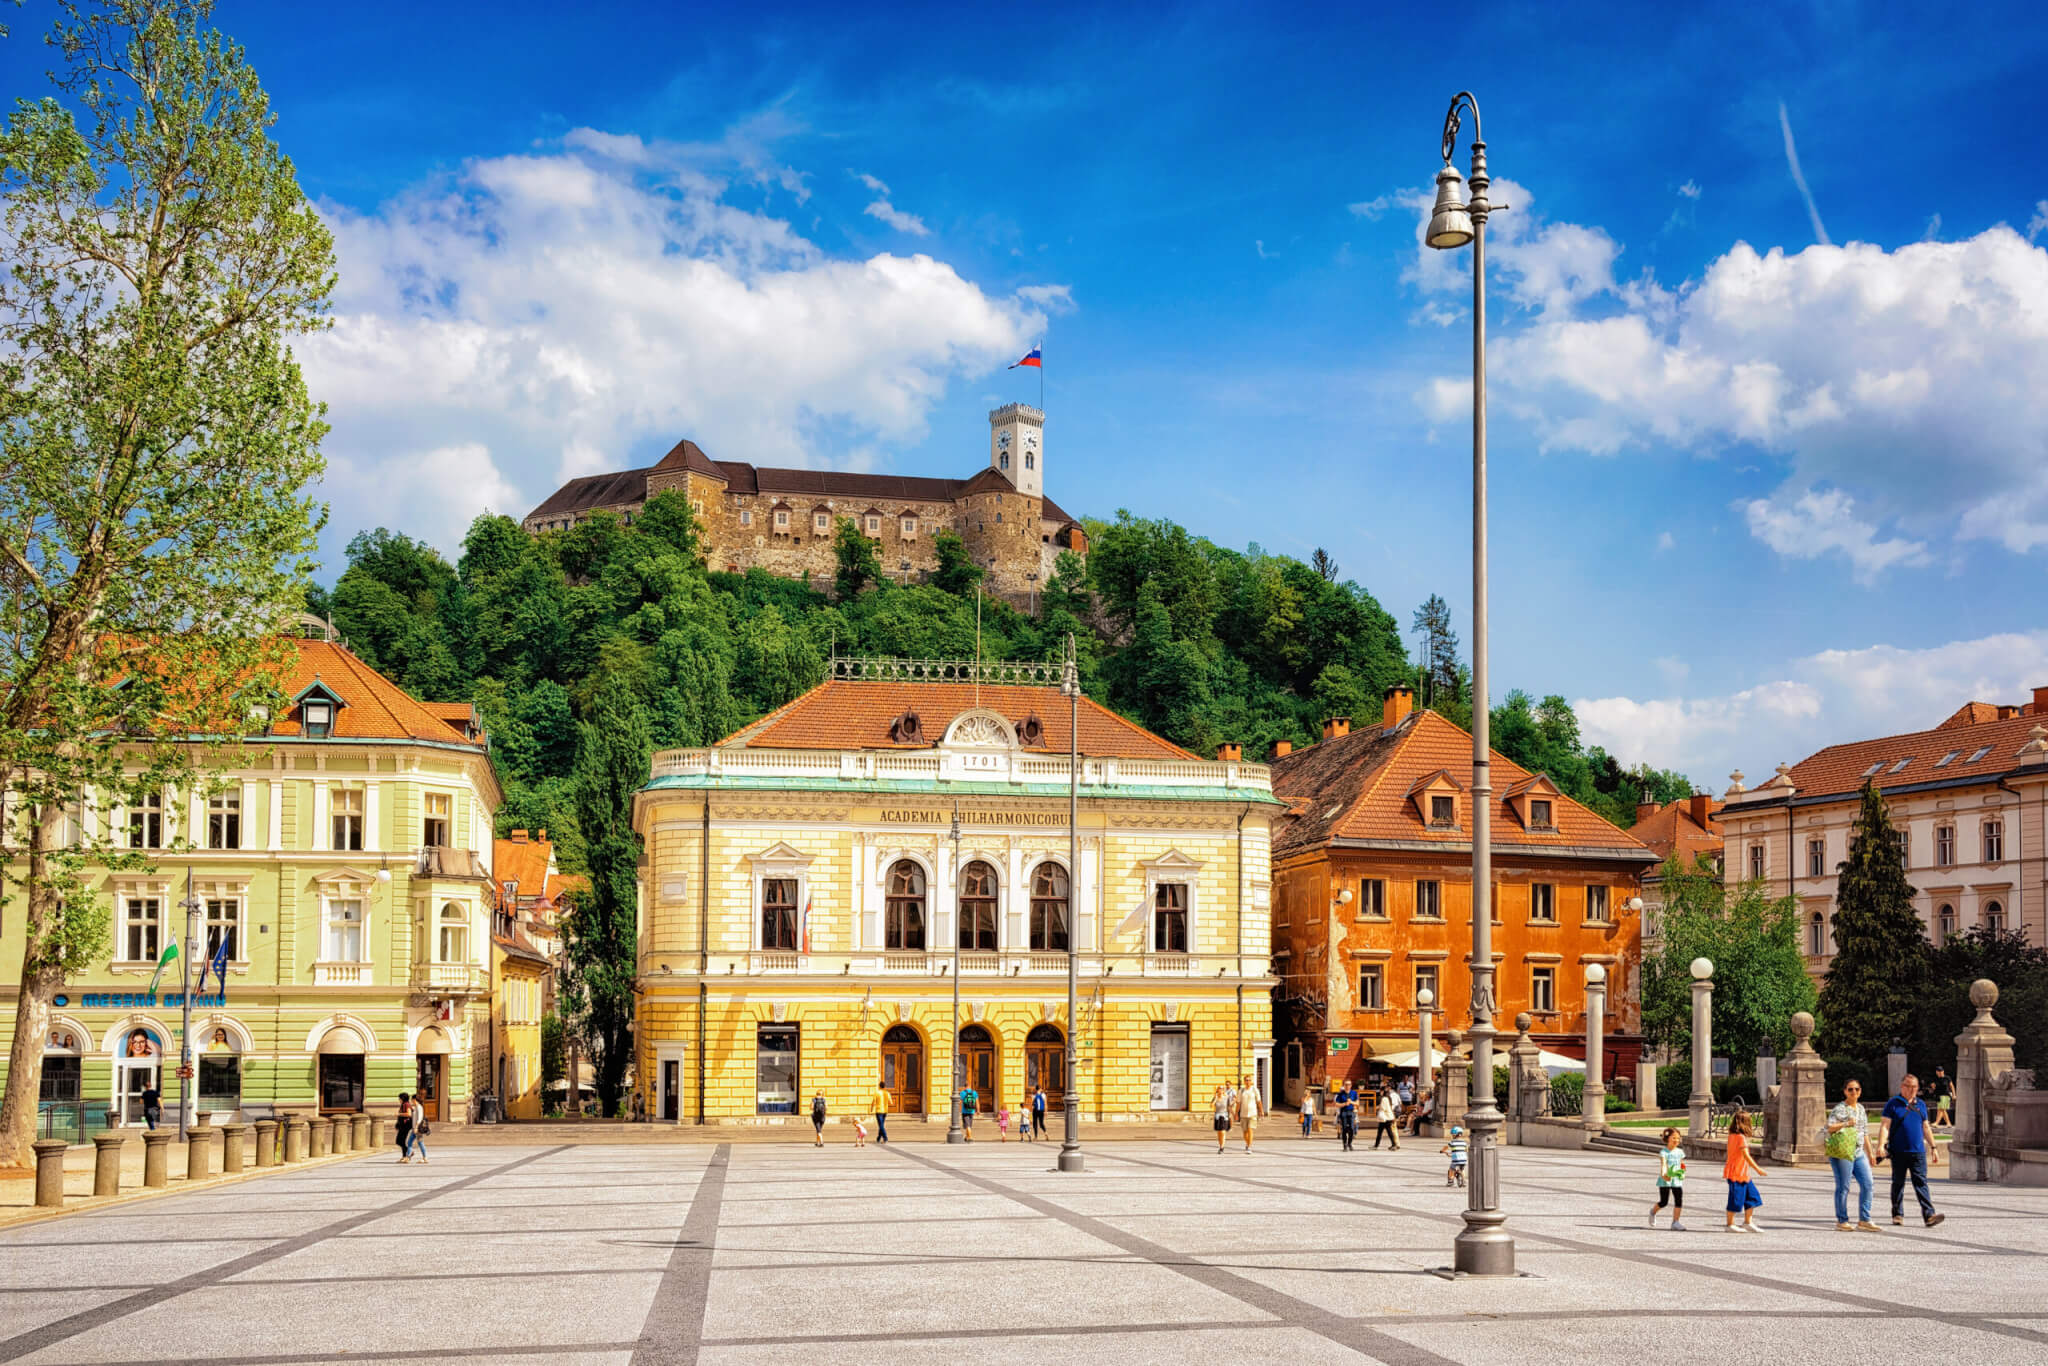 Academia Philarmonic on Congress square and Old castle Ljubljana Slovenia